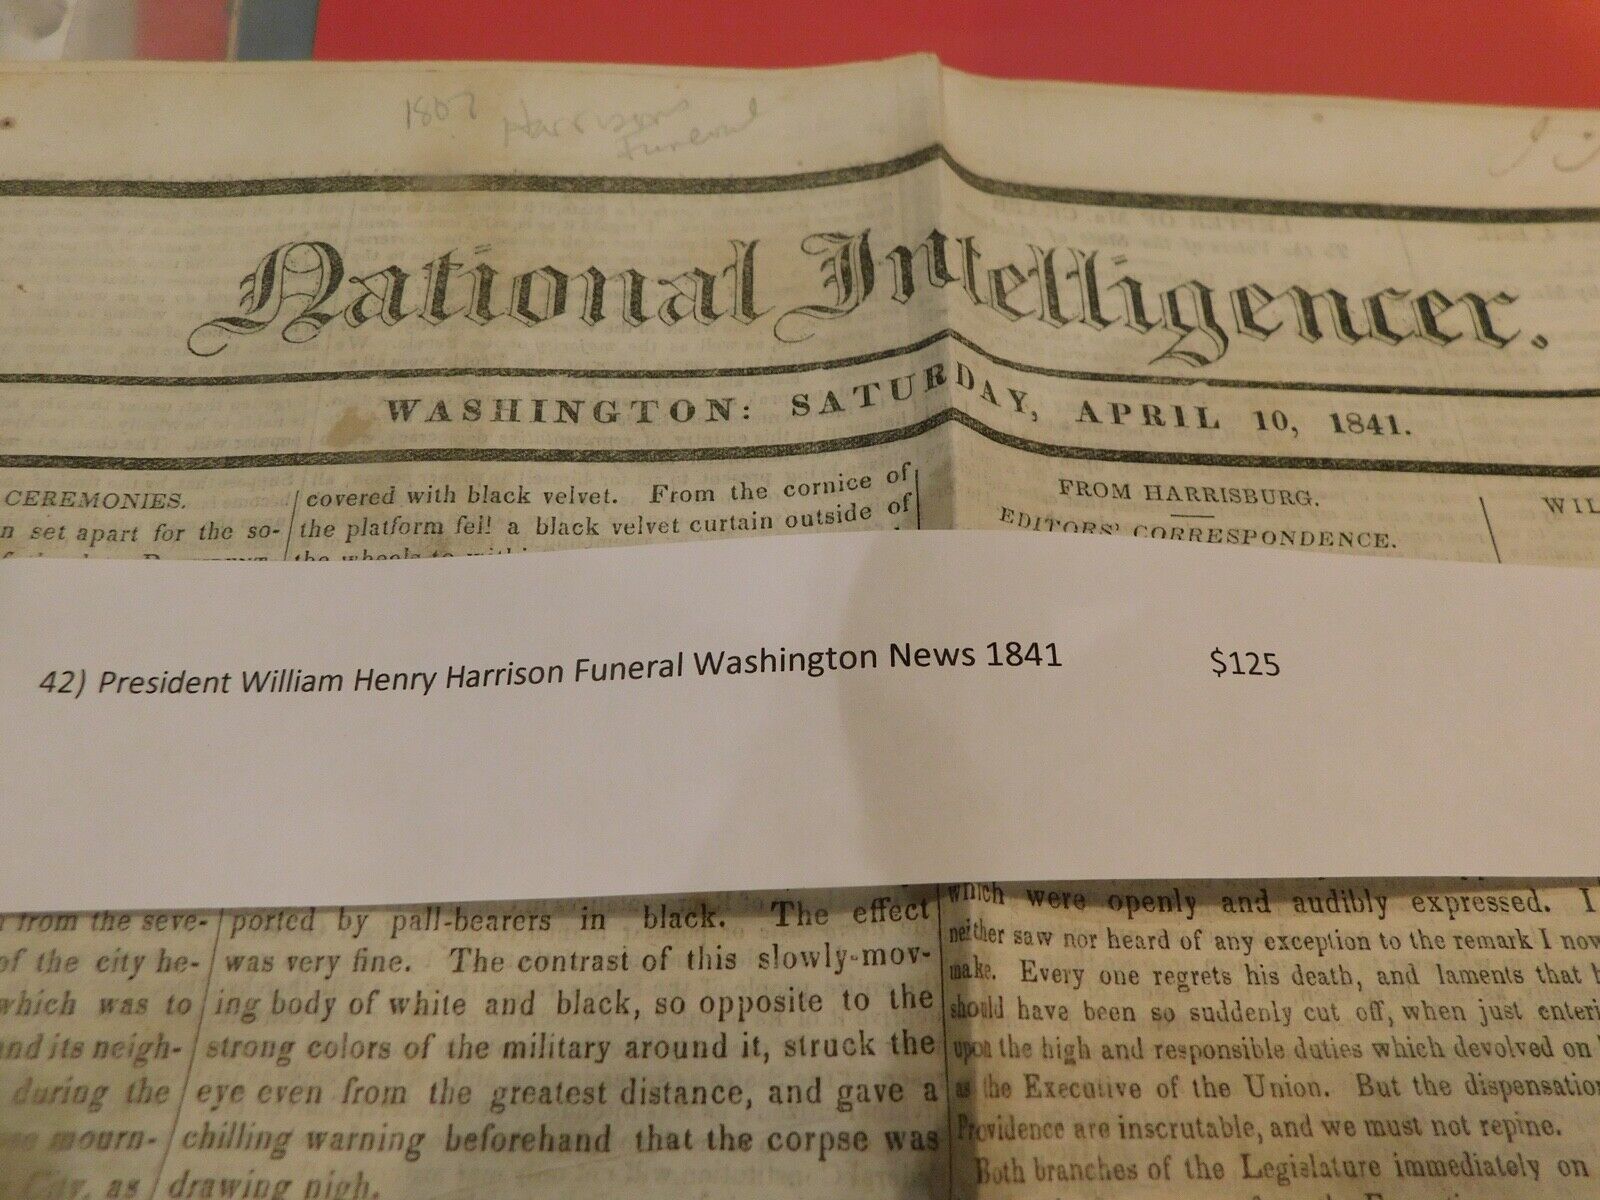 543 President William Henry Harrison The Funeral Washington News 1841